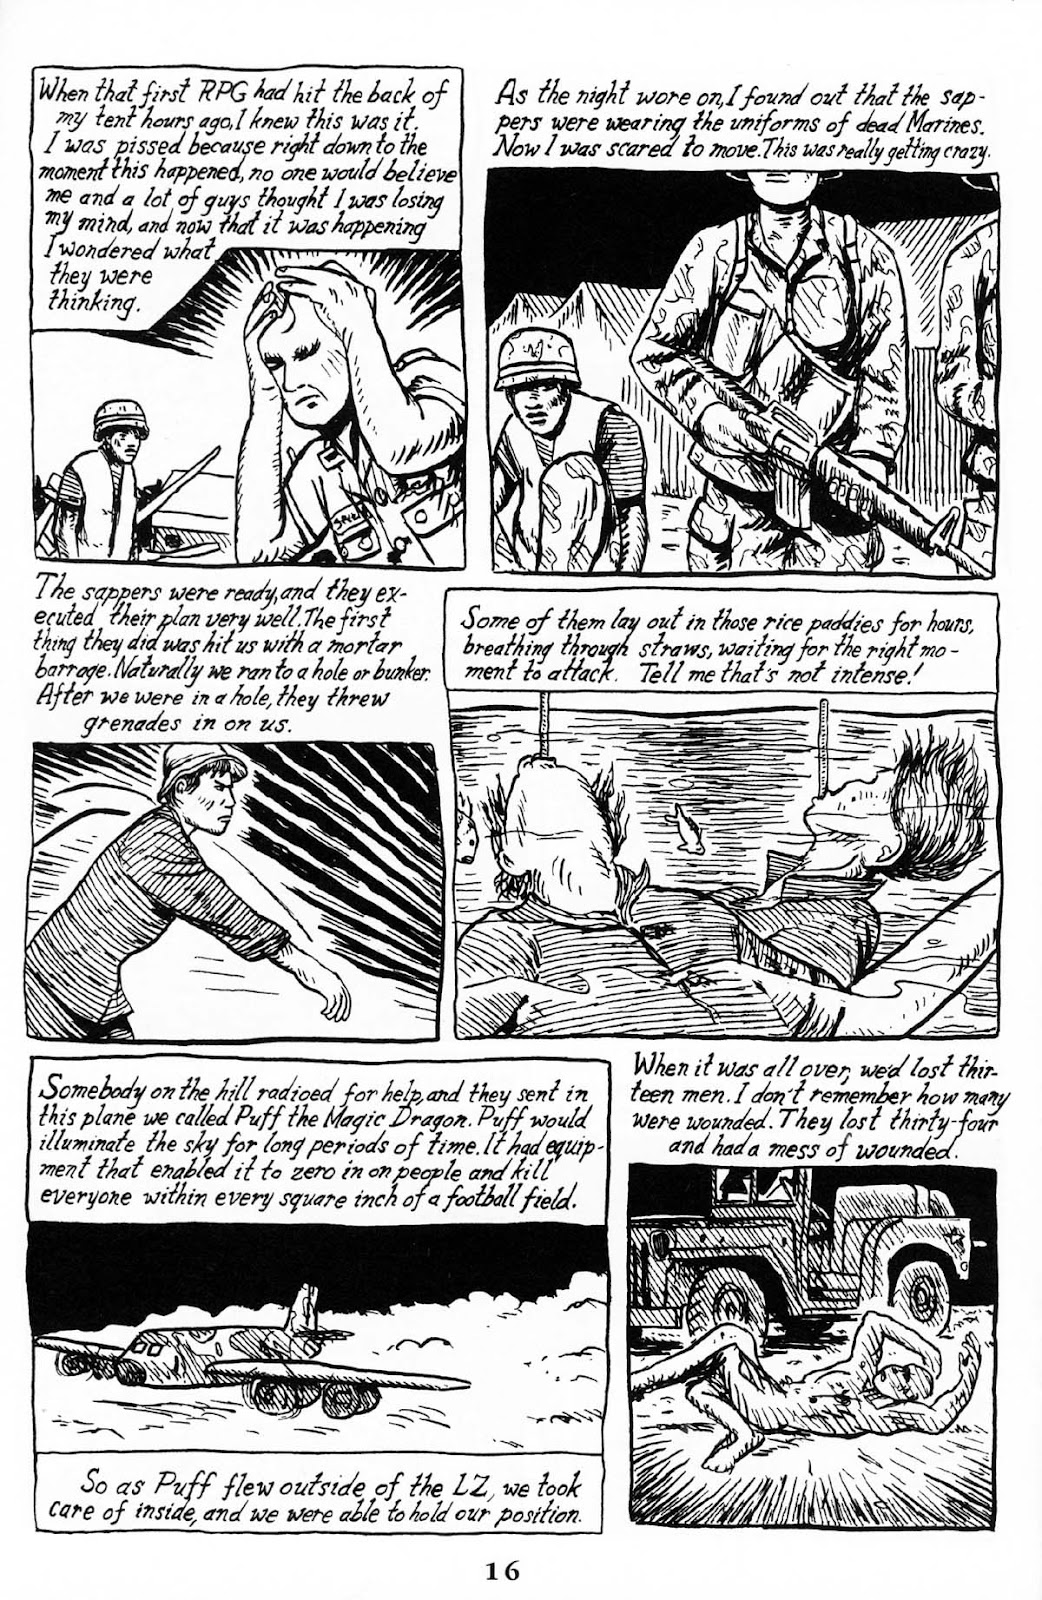 American Splendor: Unsung Hero issue 2 - Page 18